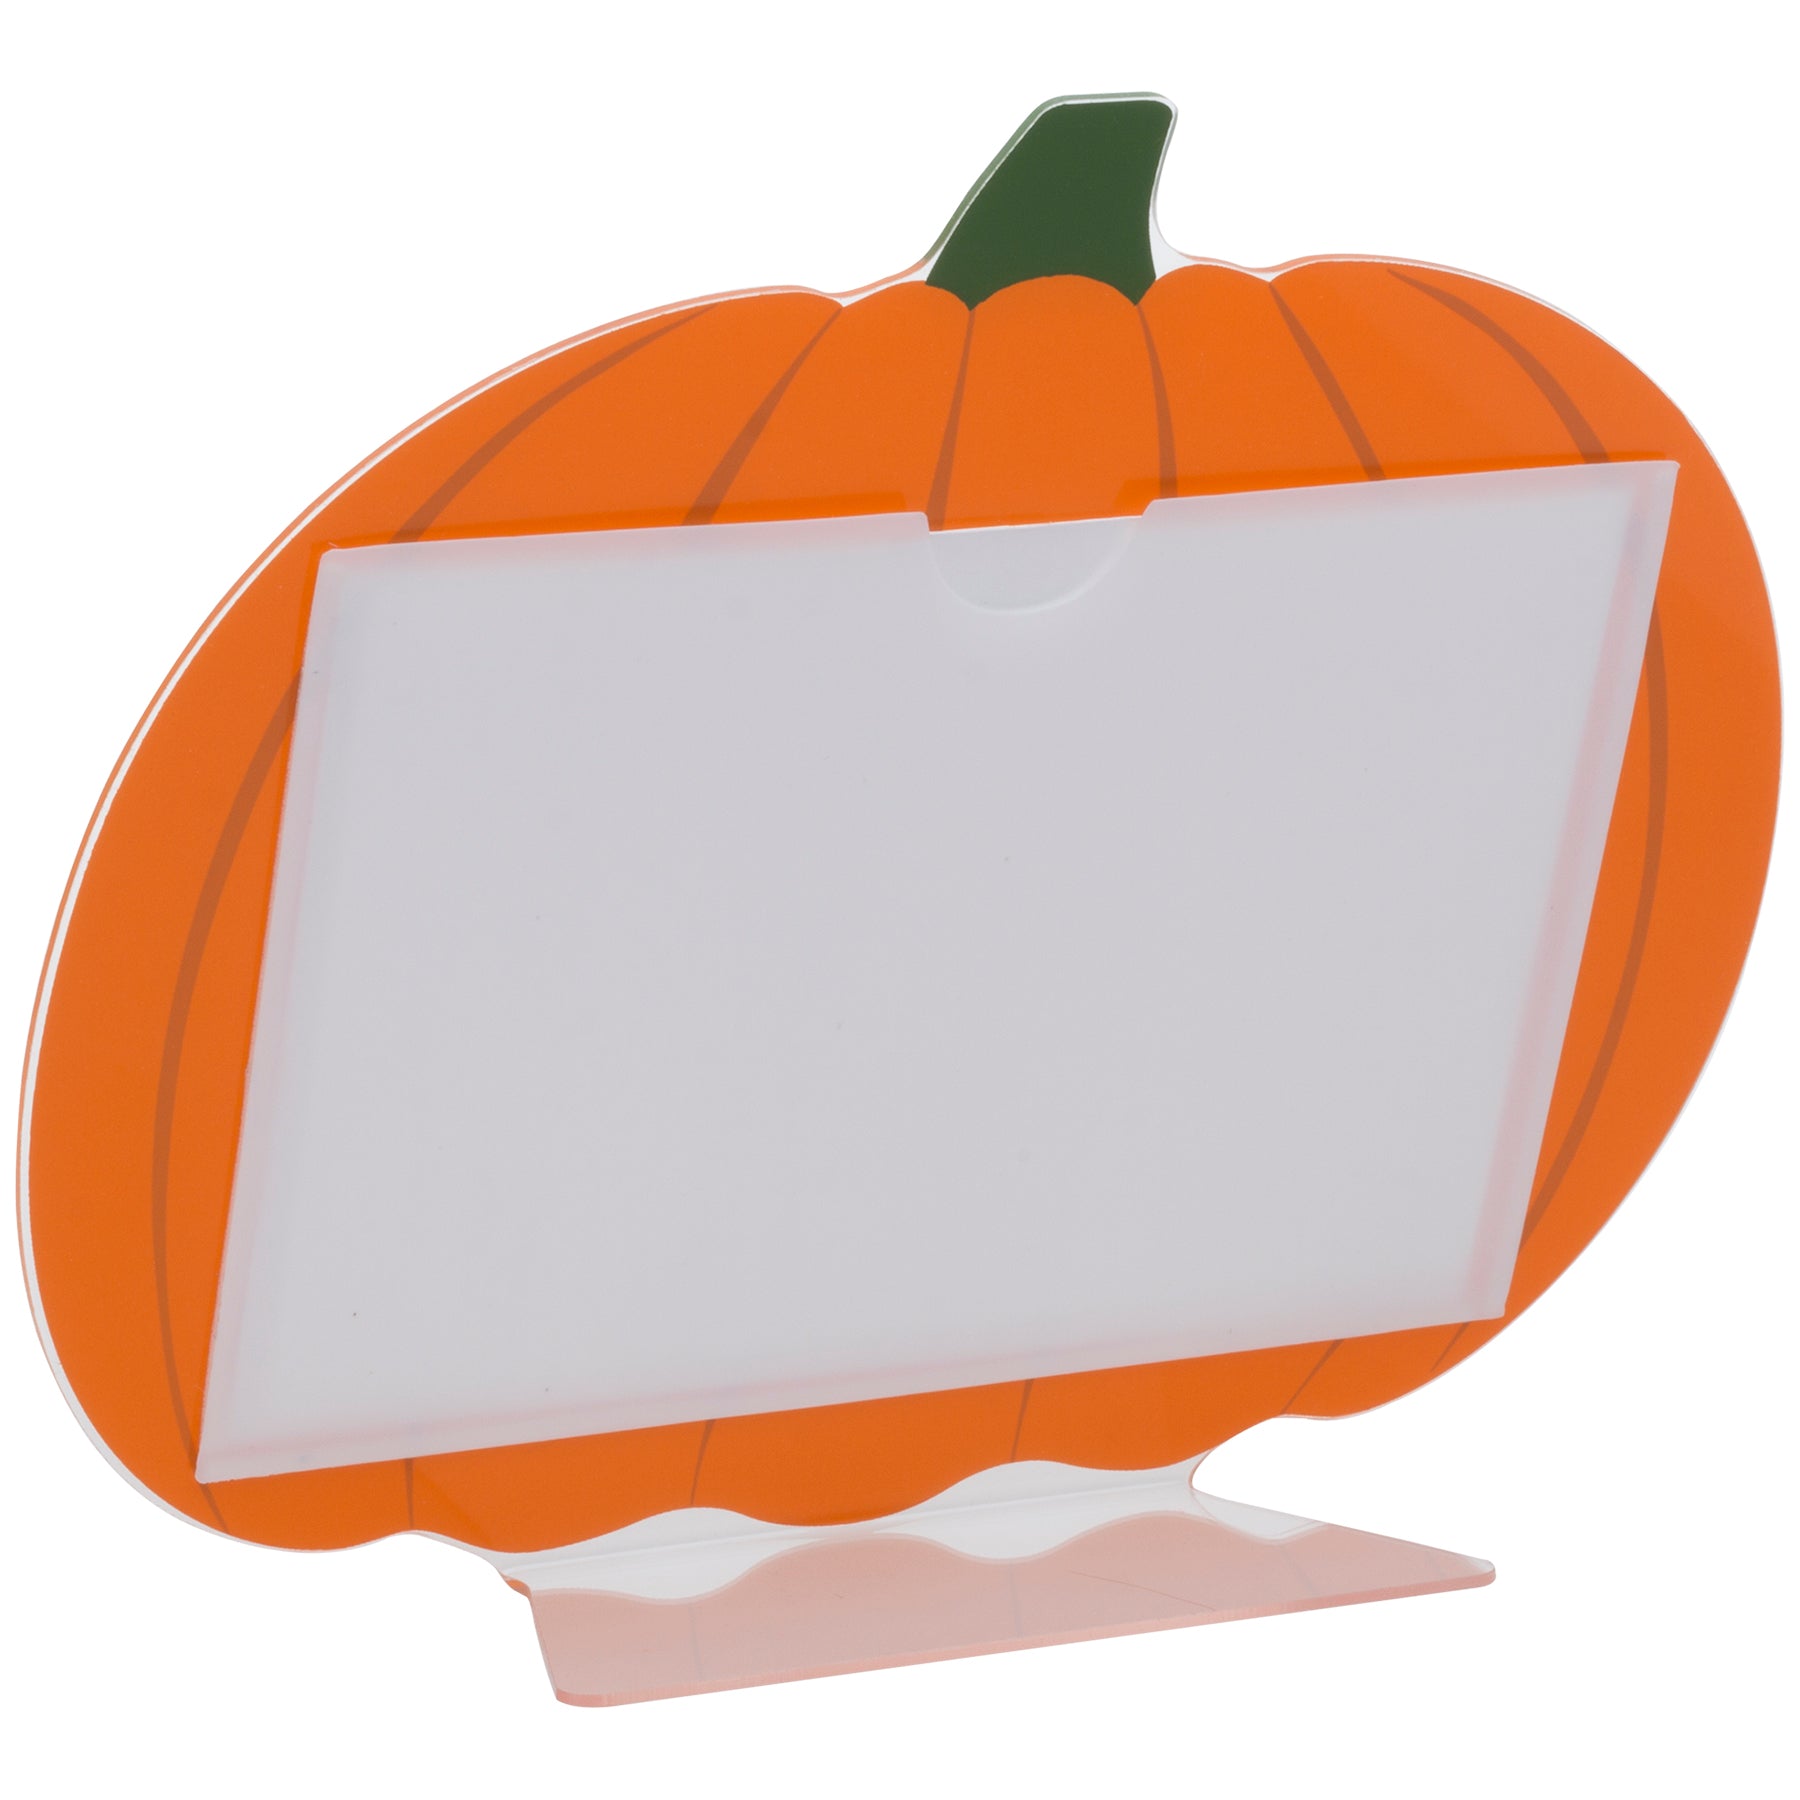 Pumpkin Picture Frame